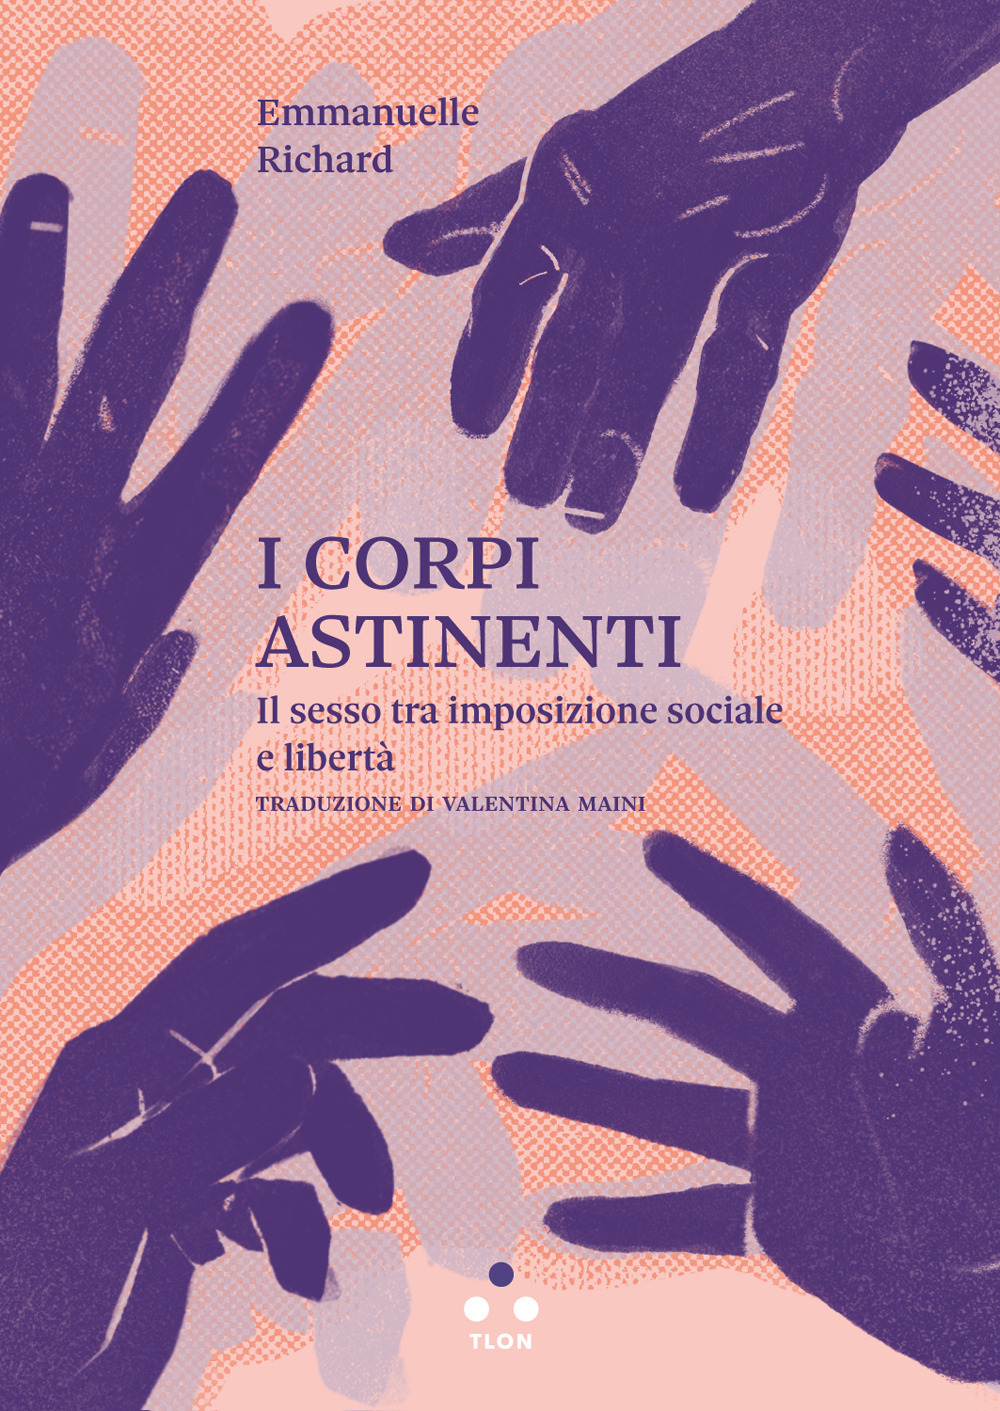 I corpi astinenti (Paperback, Italiano language, 2021, Tlon)